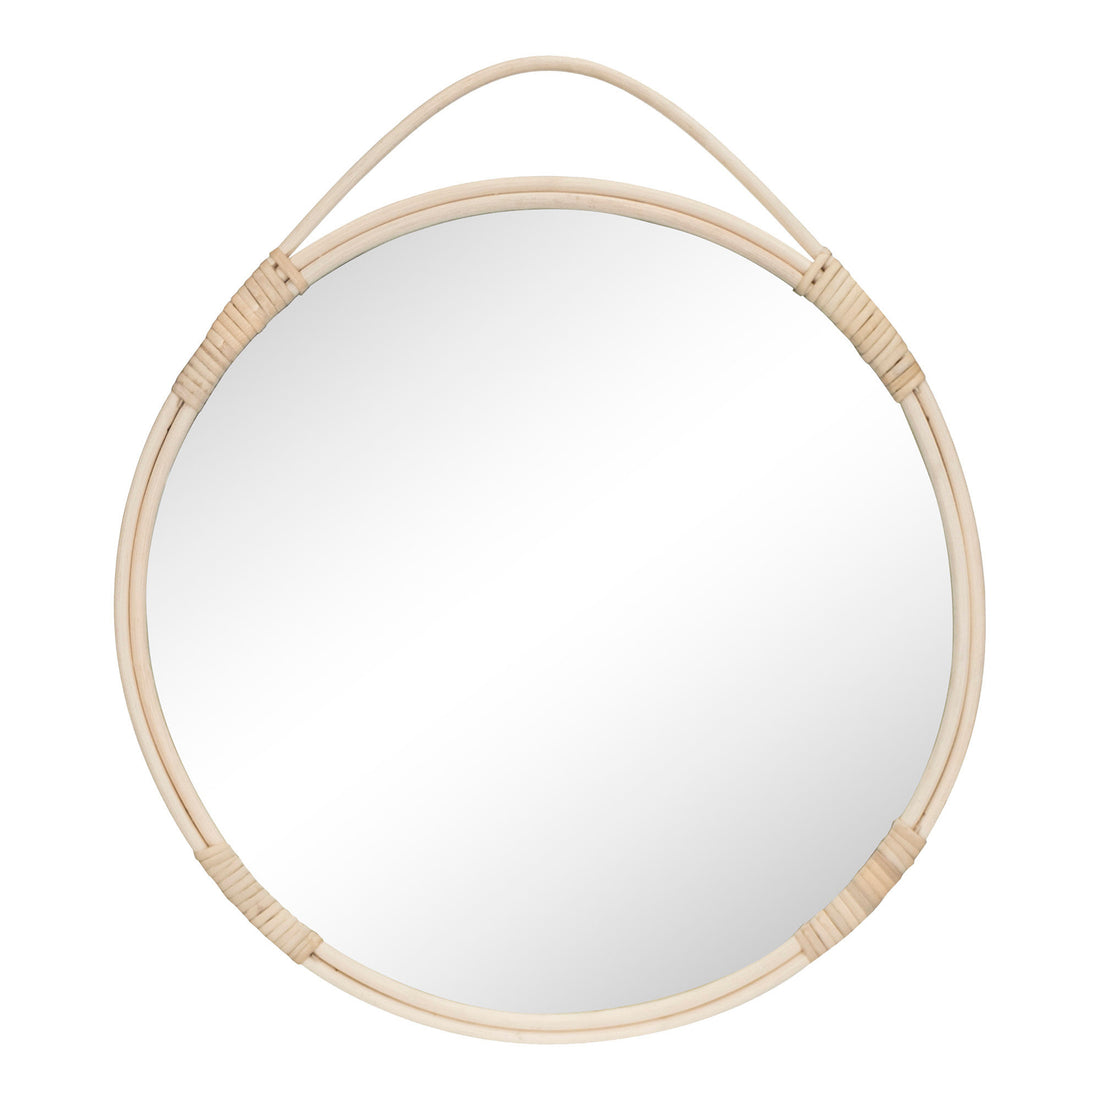 Malo mirror - mirror with rattan edge, nature, round, Ø50 cm - 1 - pcs